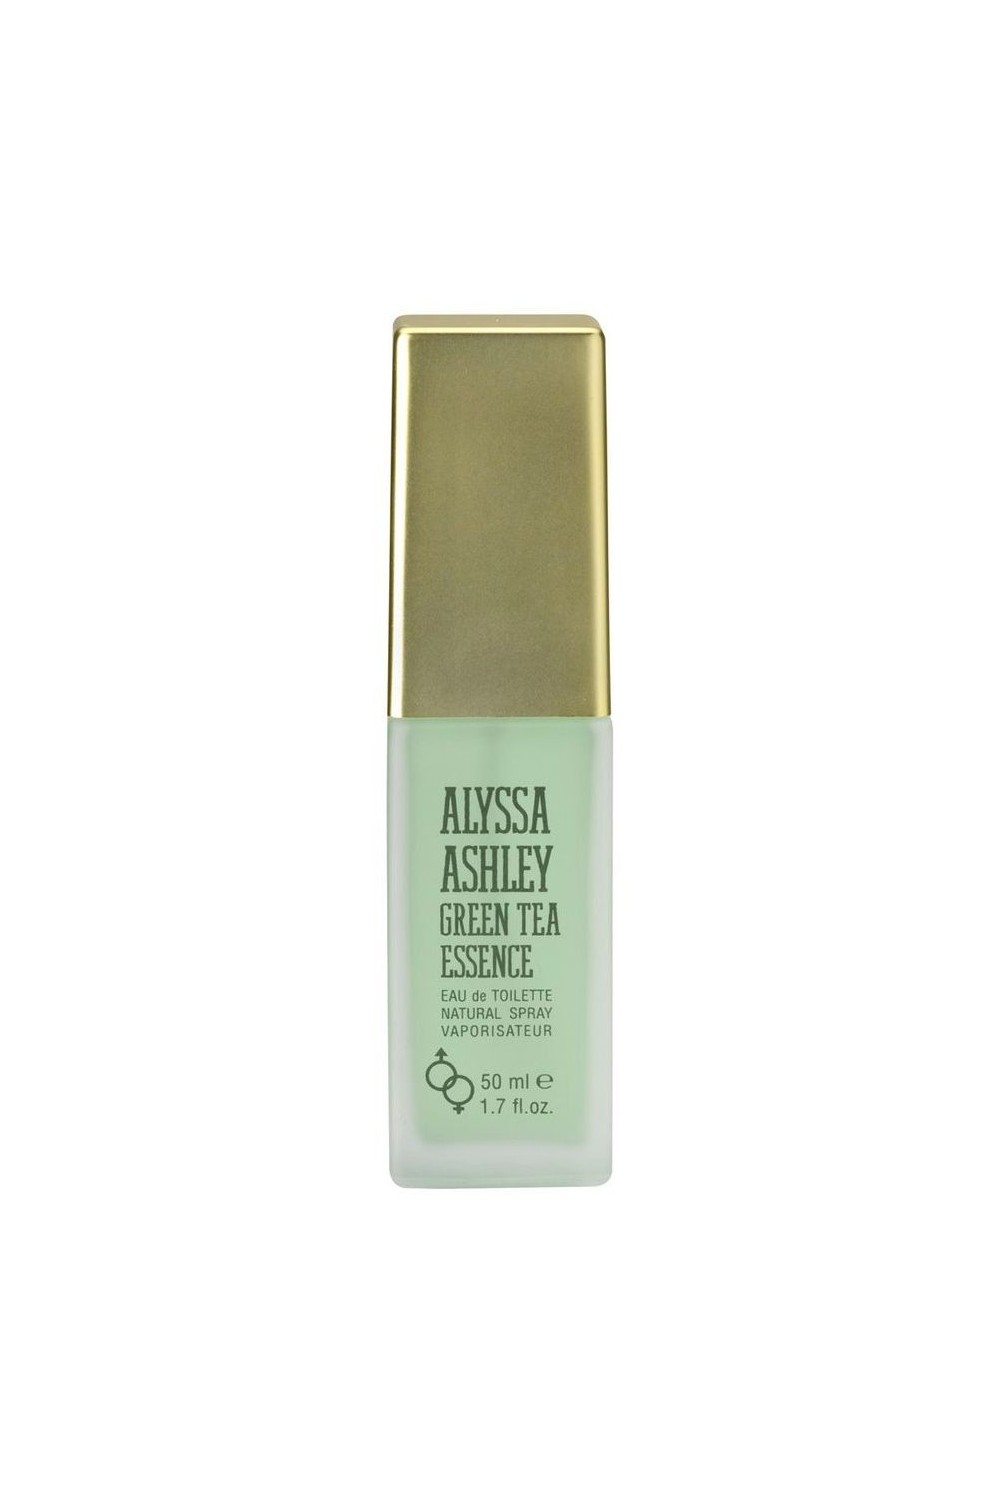 Alyssa Ashley Green Tea Essence Eau De Toilette Spray 50ml